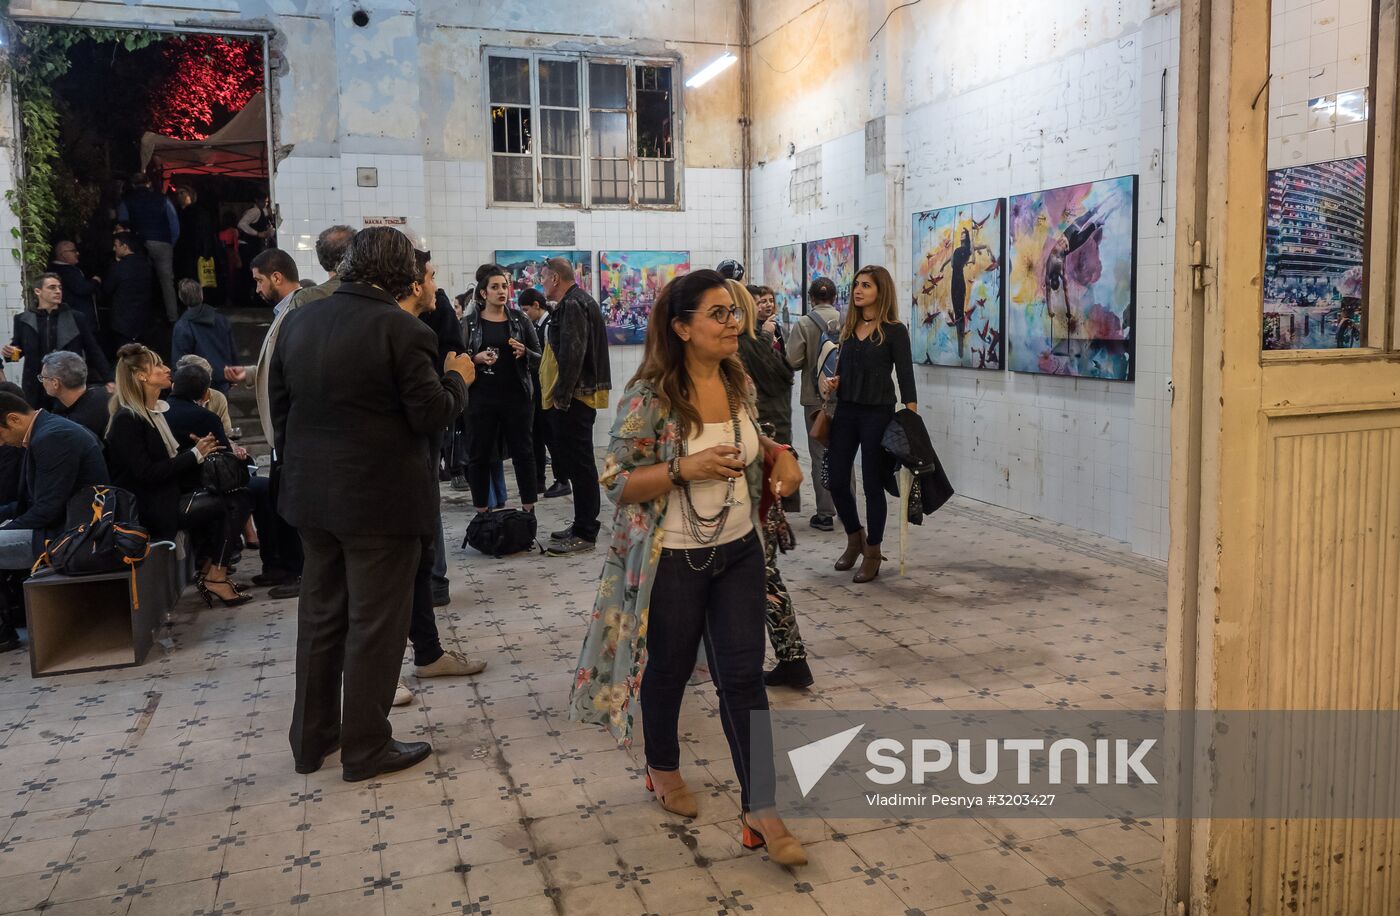 FotoIstanbul 2017 festival kicks off